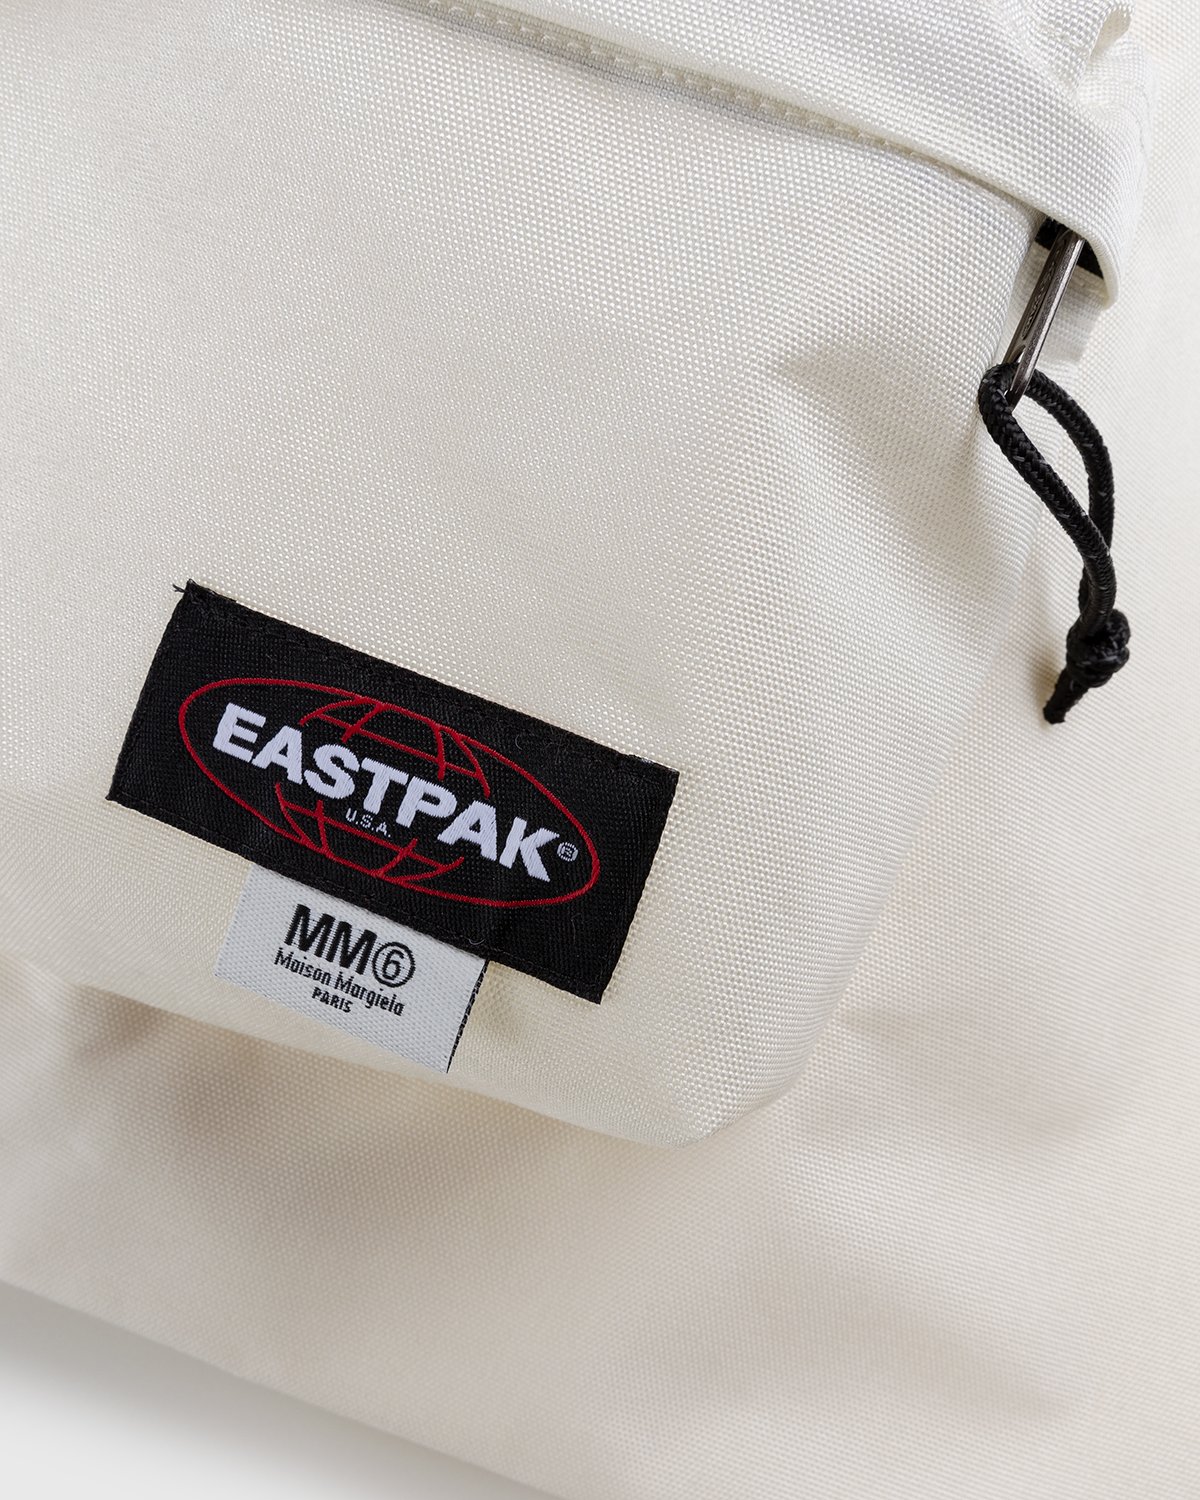 MM6 Maison Margiela x Eastpak - Borsa Shopping Bag White - Accessories - White - Image 6